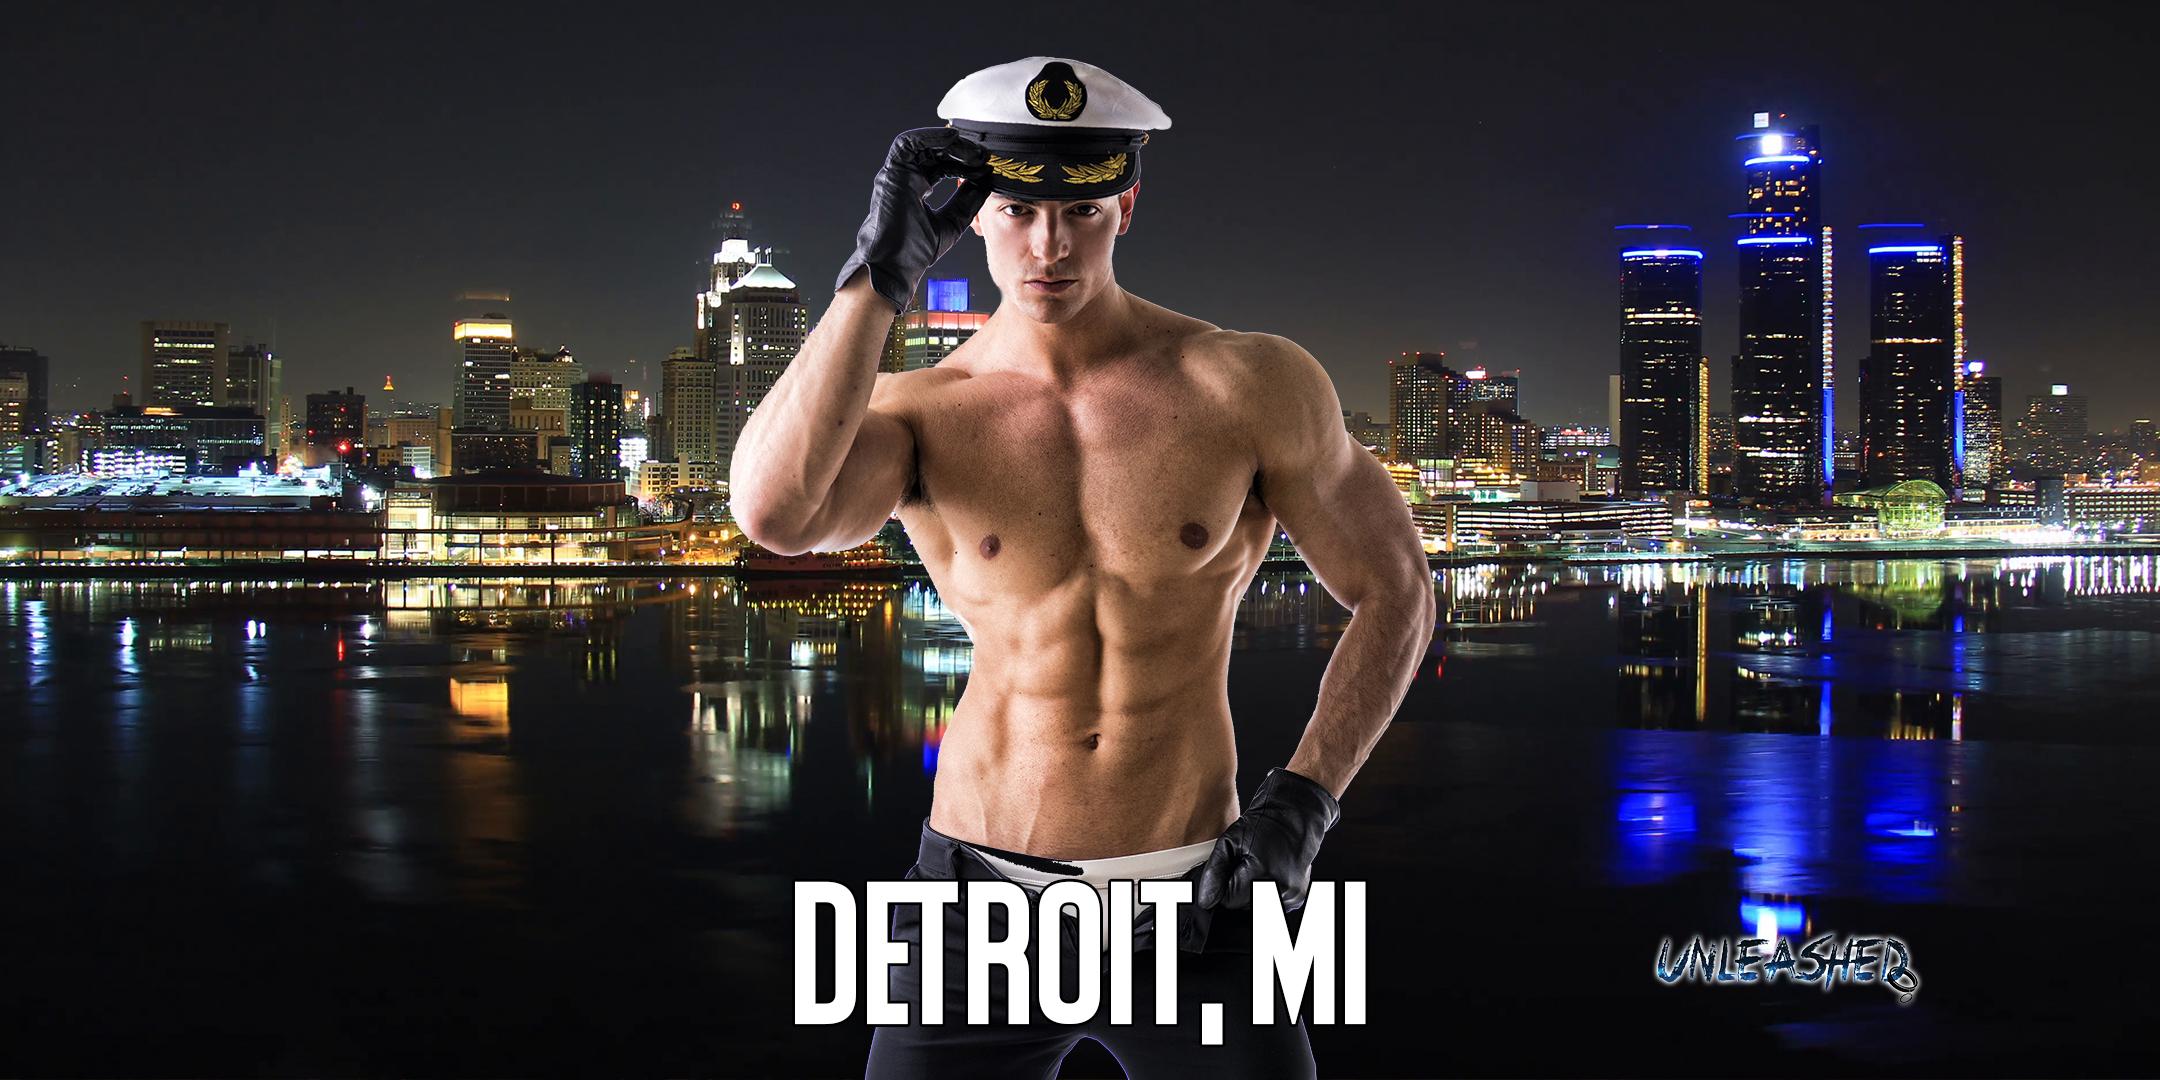 Male Strippers UNLEASHED Male Revue Detroit, MI 8-10 PM